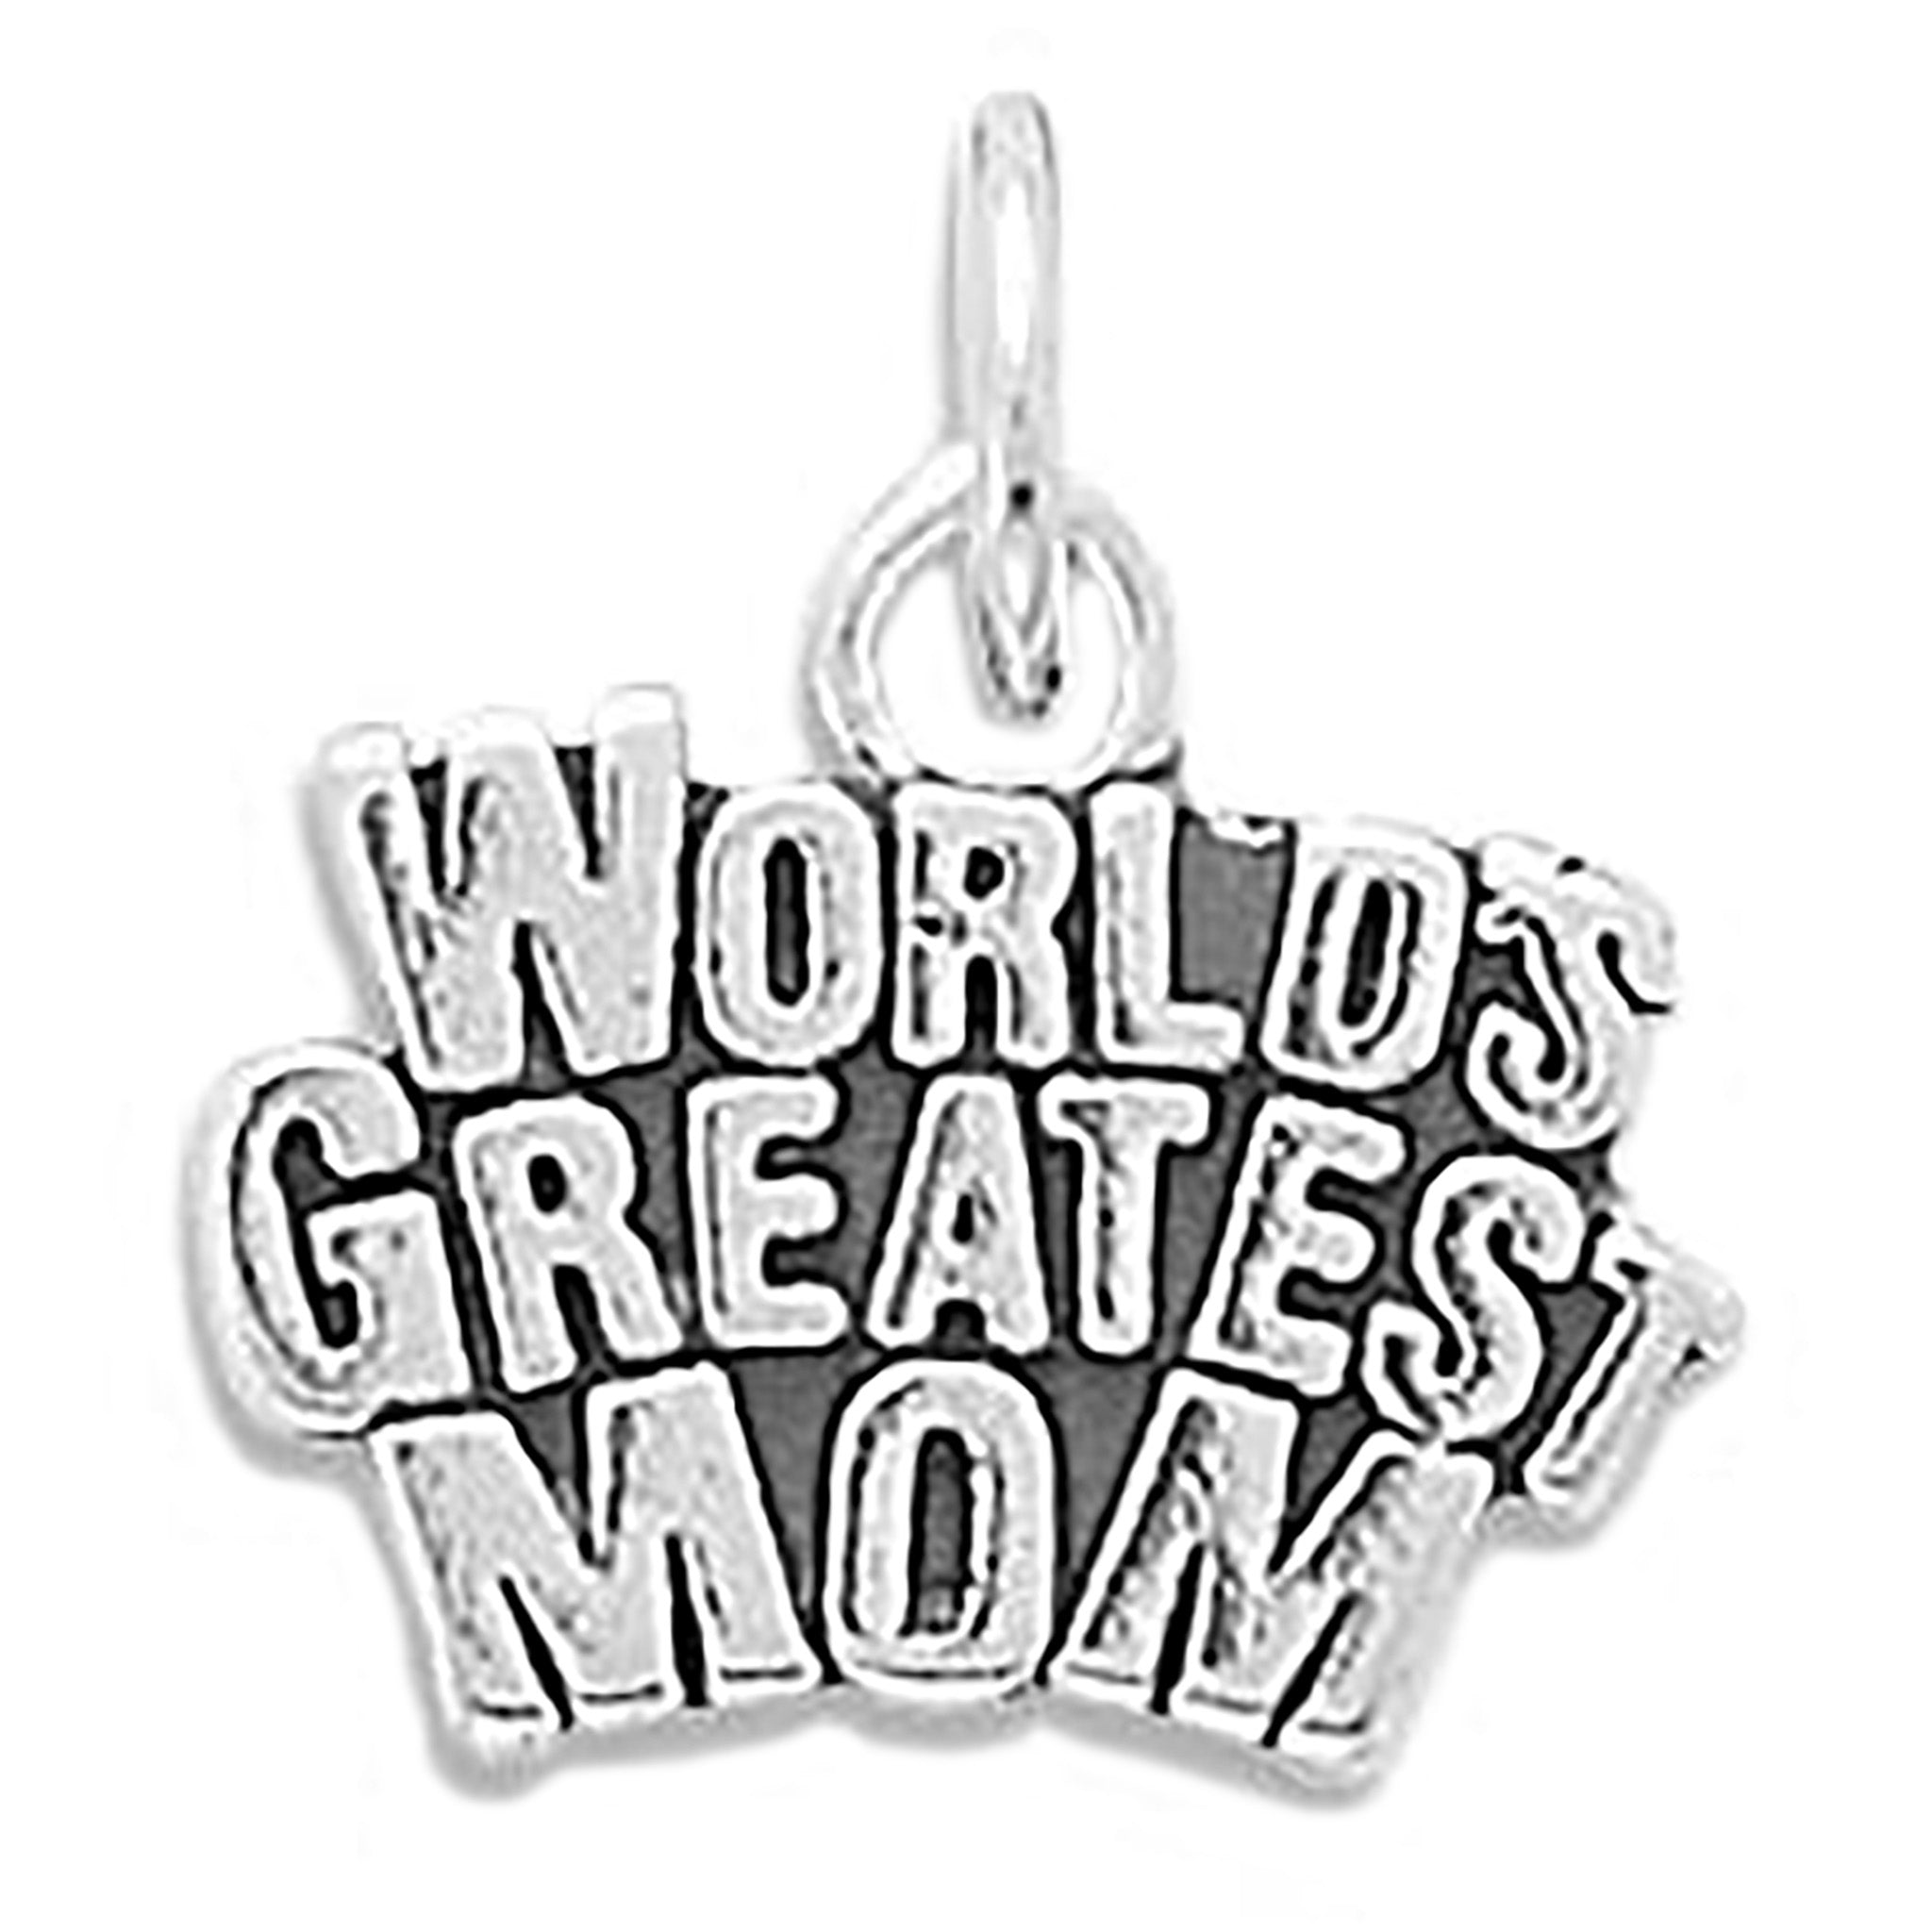 World's Greatest Mom Charm